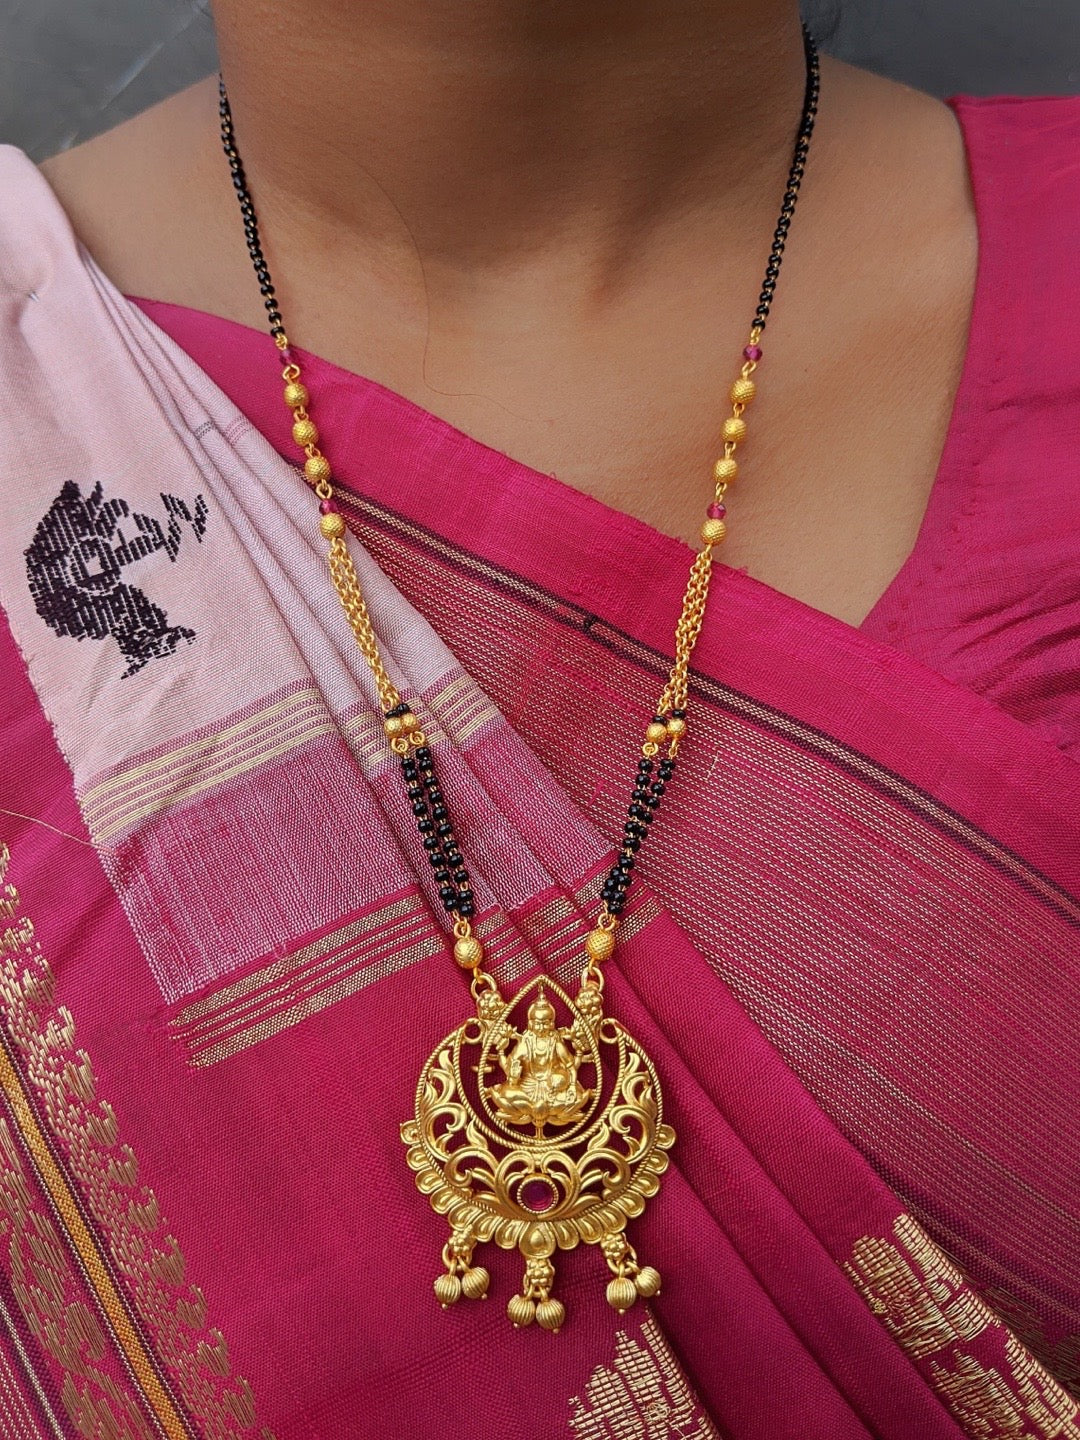 image for Short Mangalsutra Designs gold mangalsutra Hindu god Lakshmi (Laxmi) pendant black gold beads chain